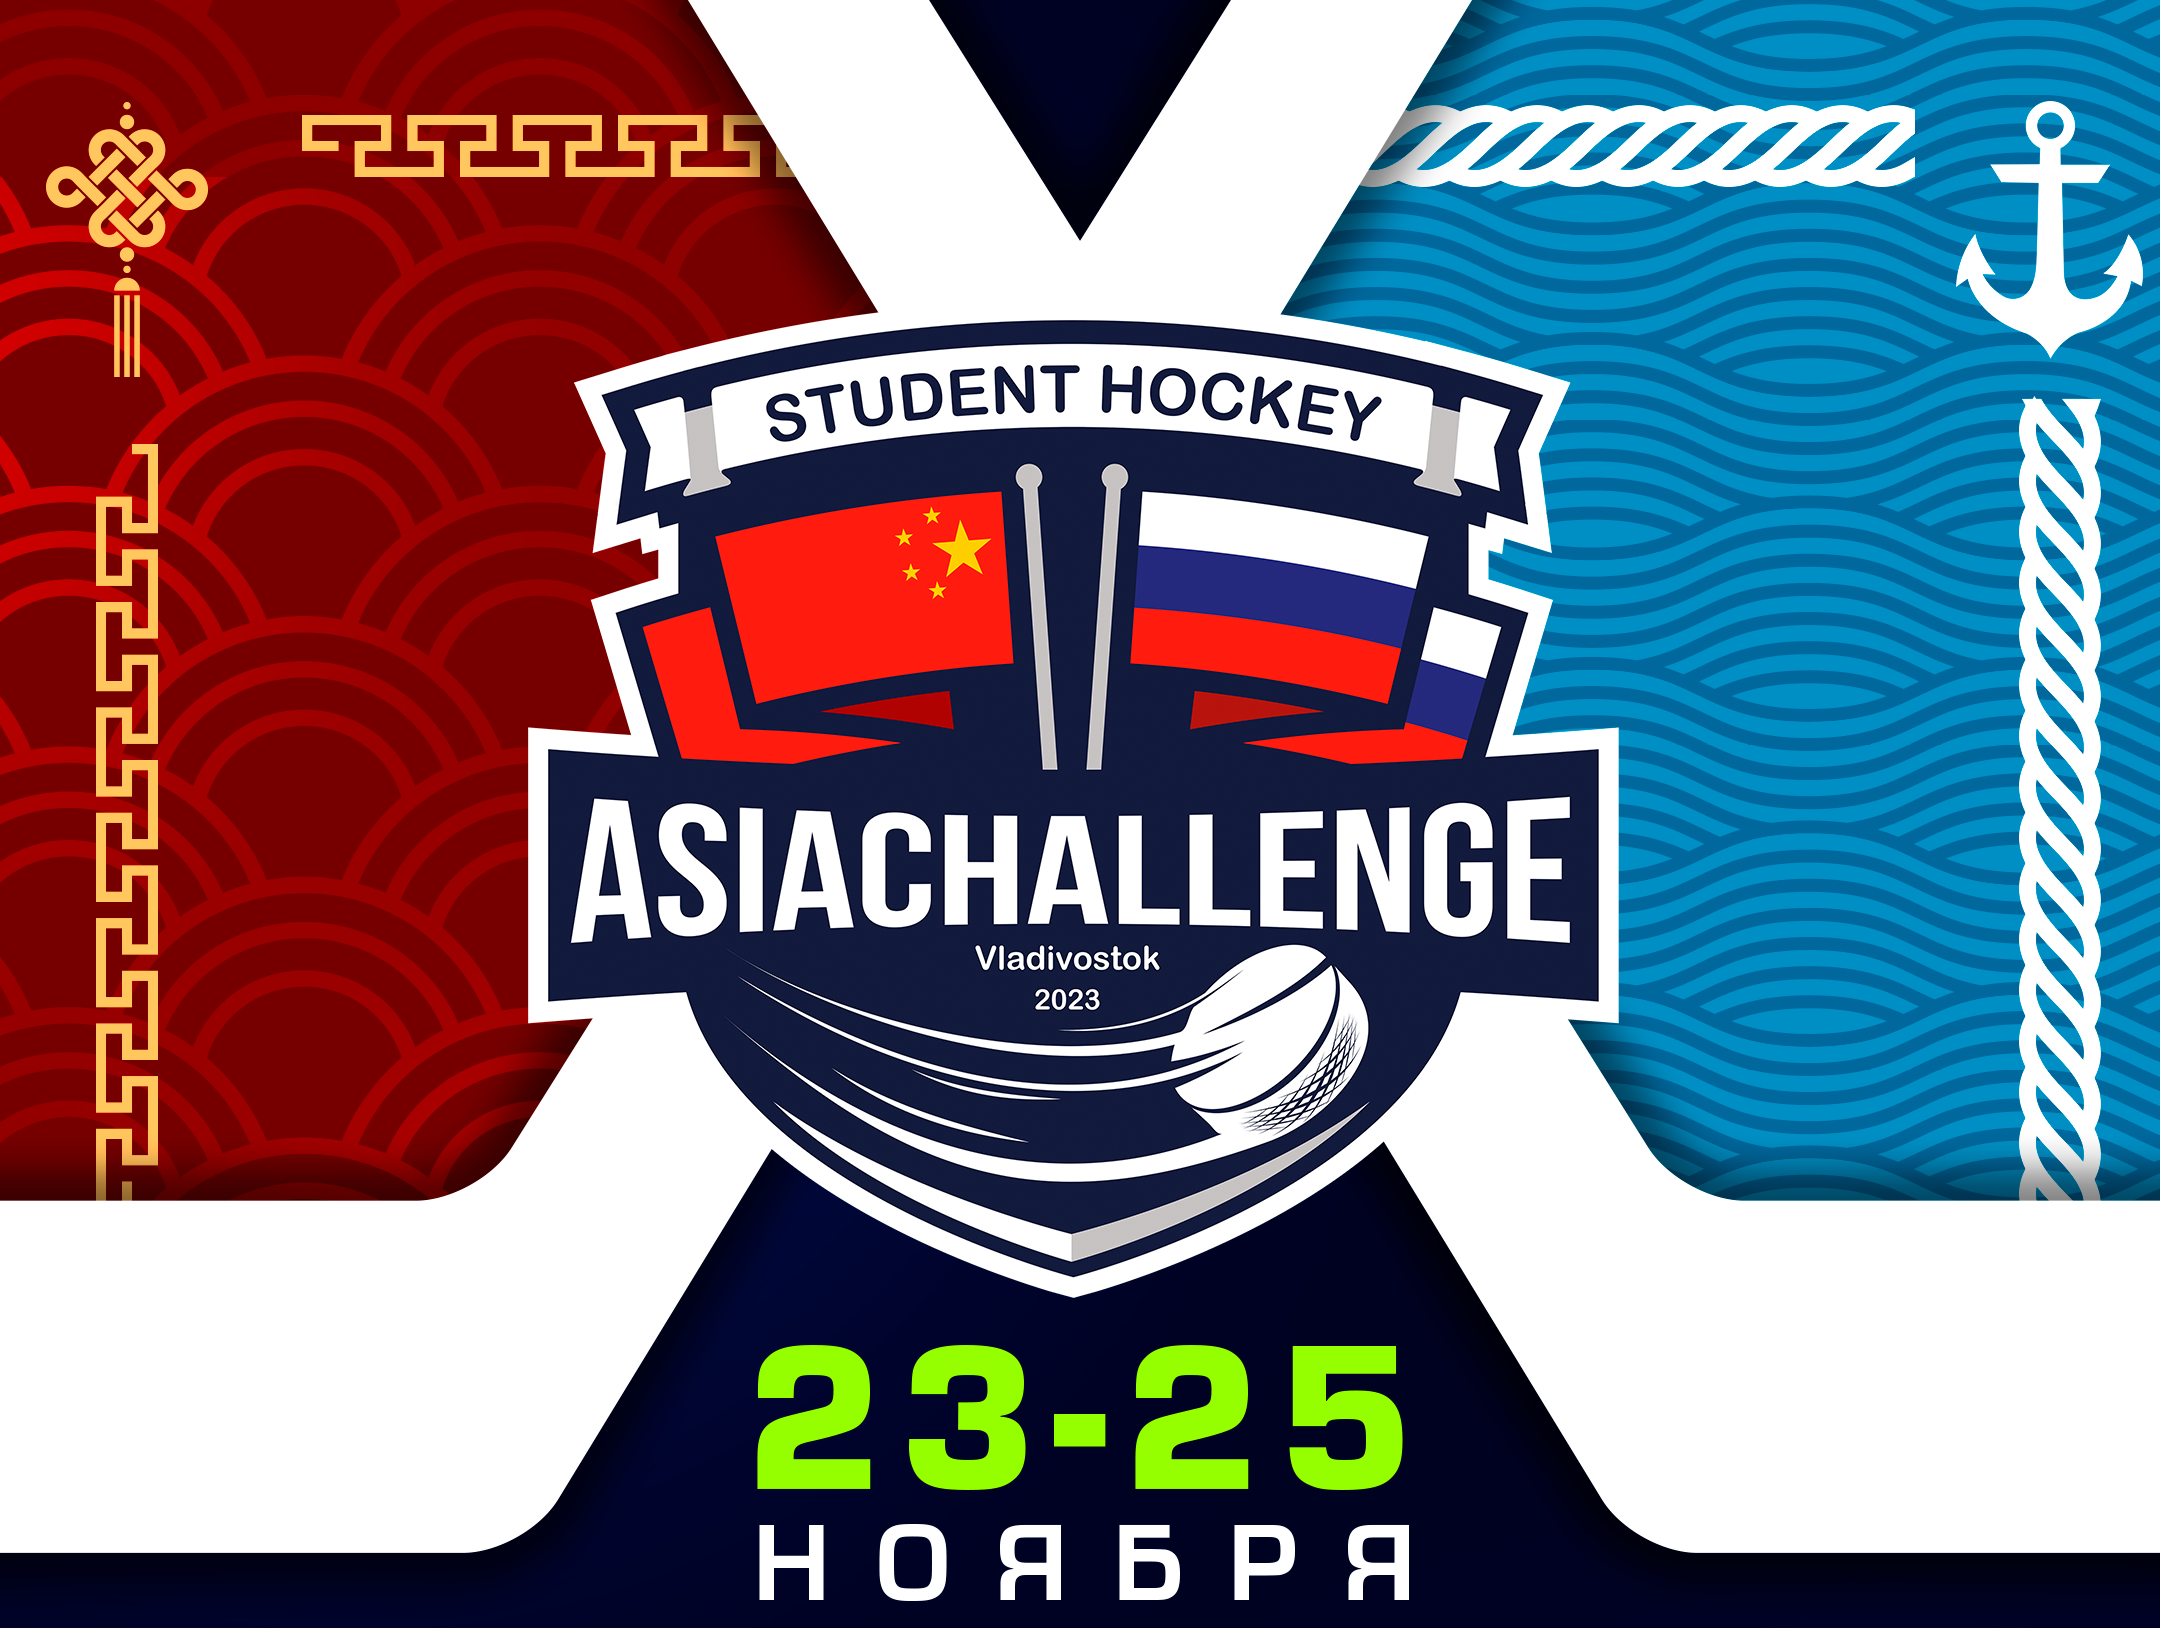 Хоккеисты ДВГАФК стали победителями Student hockey Asia Challenge